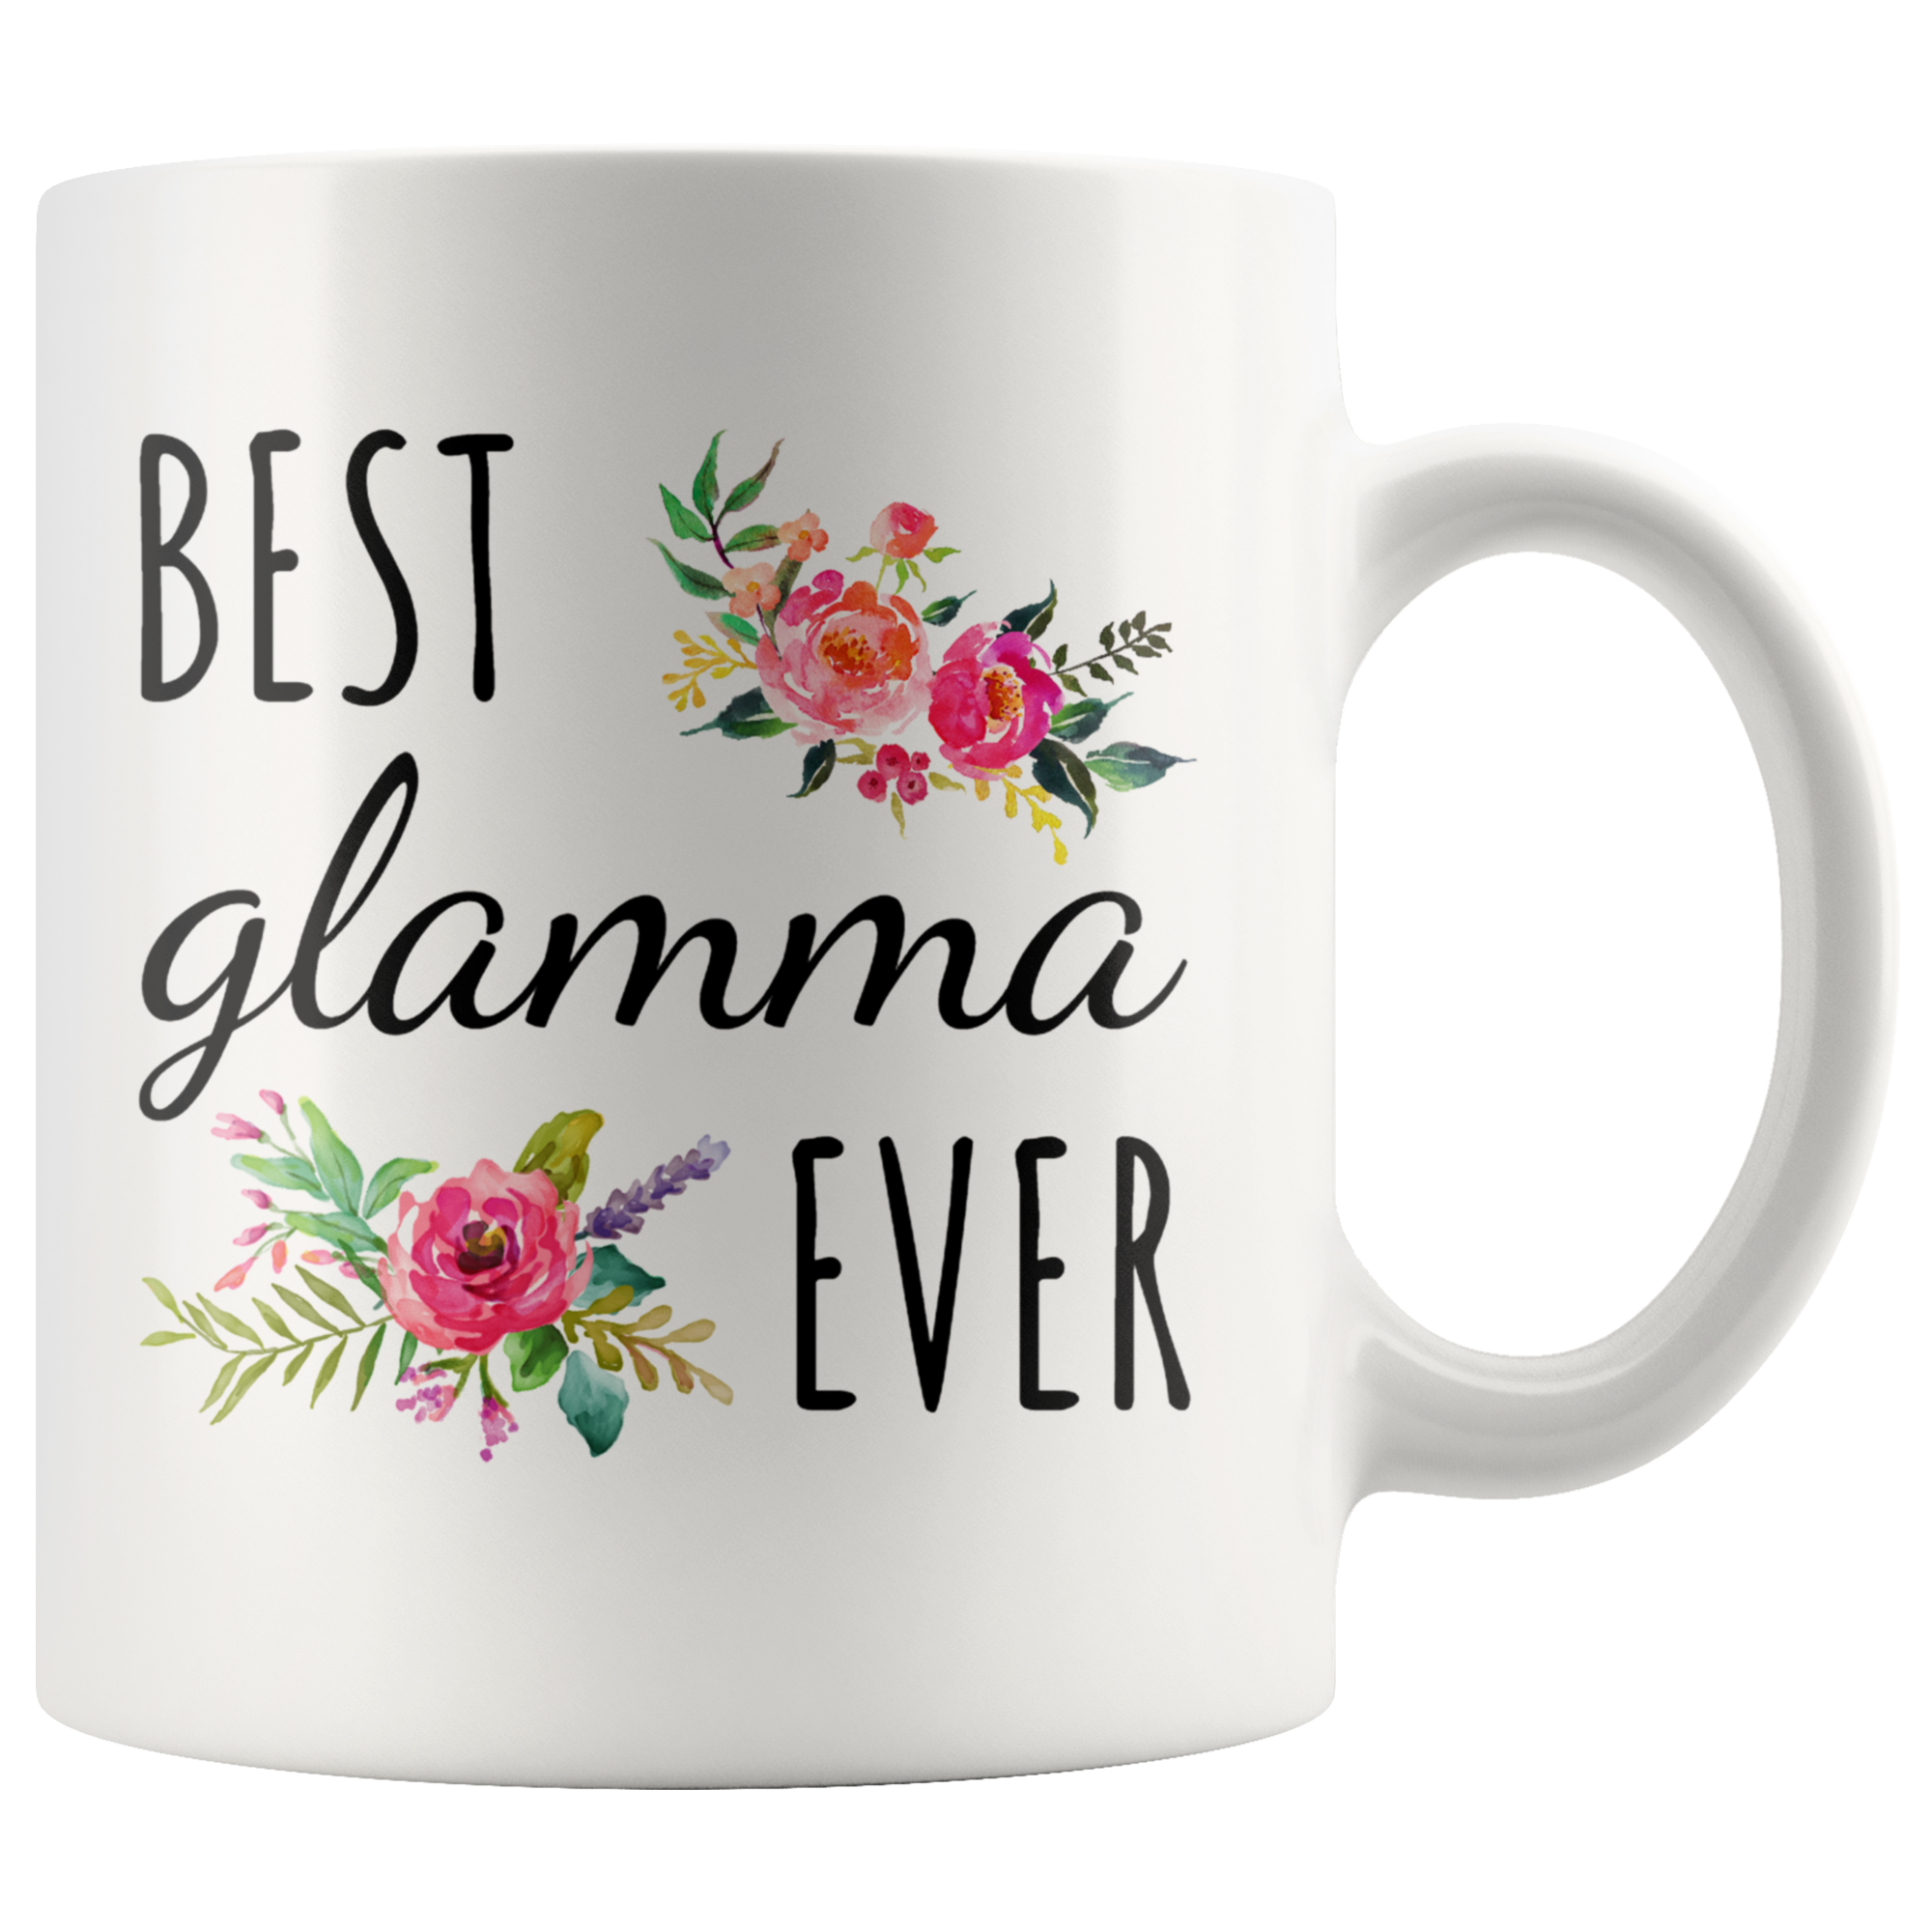 Best Glamma Mug